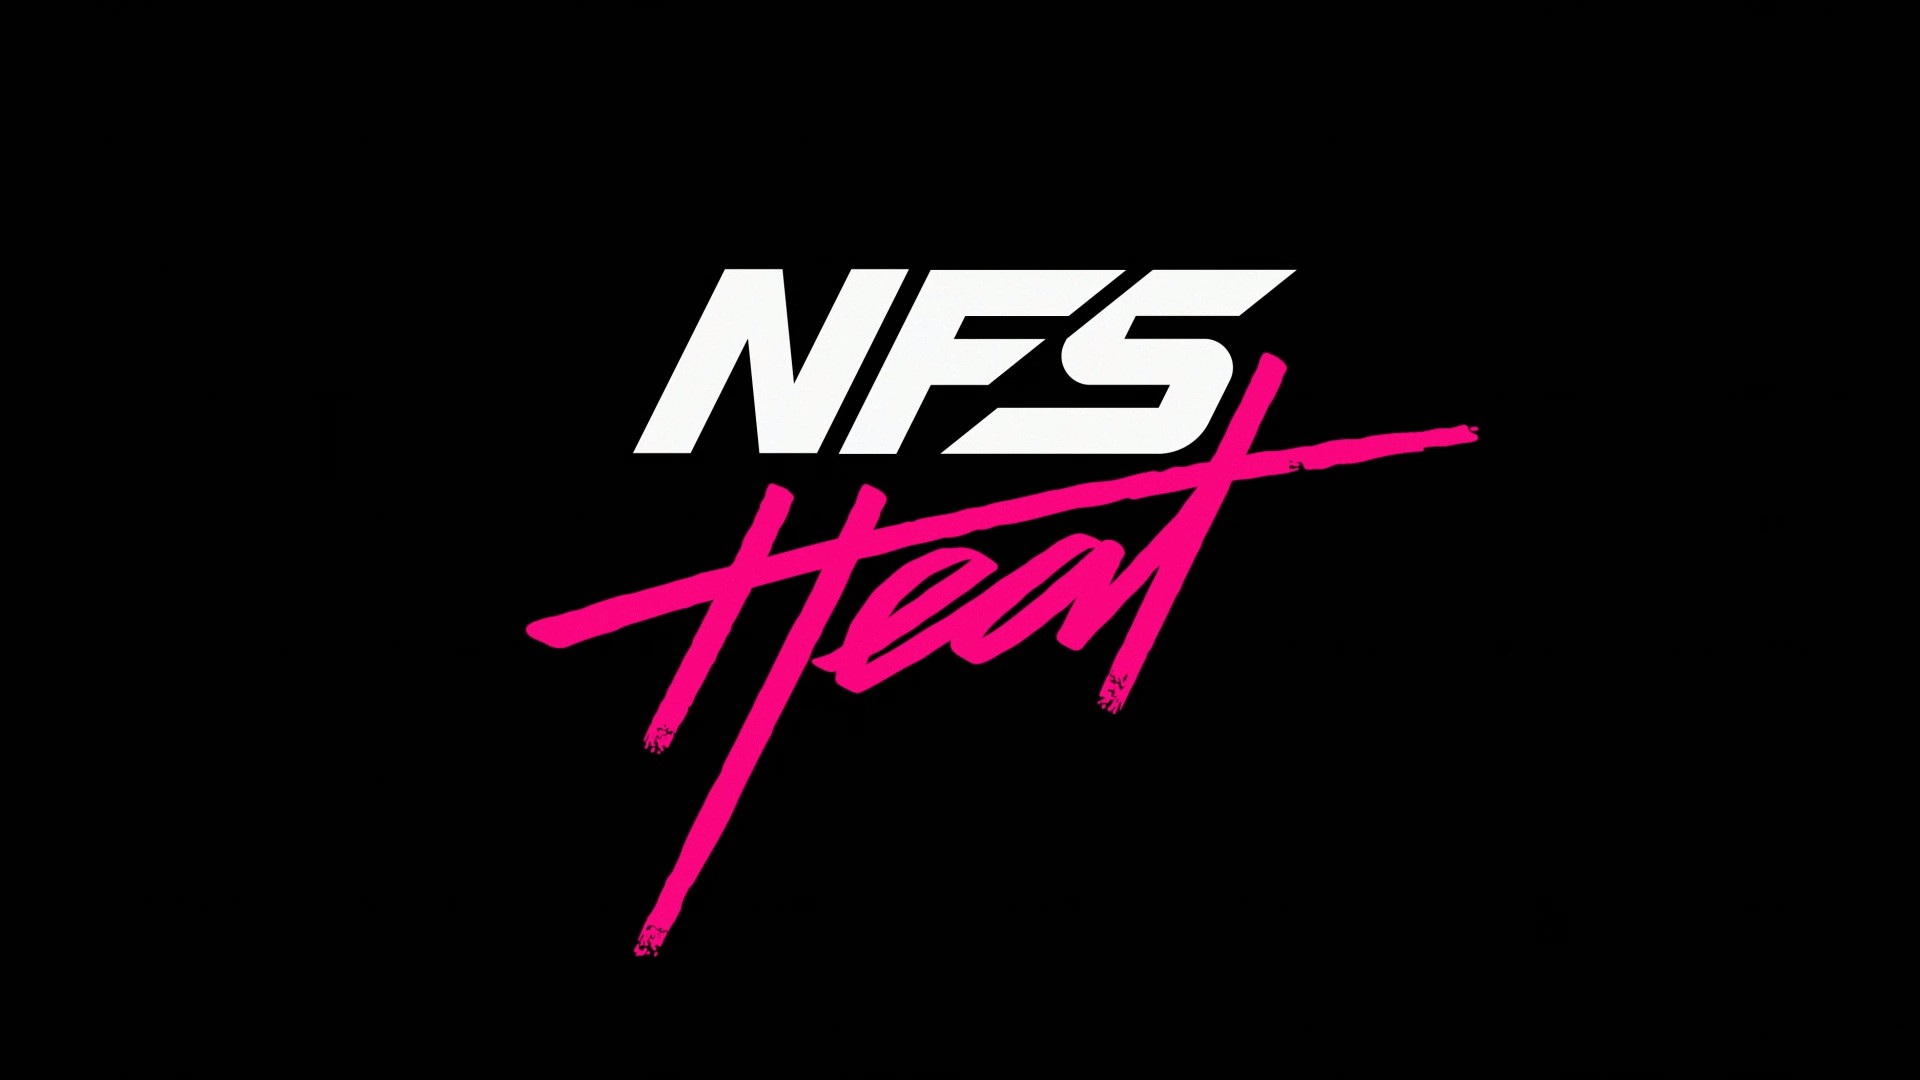 Ник спид. NFS логотип. Надпись NFS Heat. NFS Heat значок. Need for Speed: Heat.